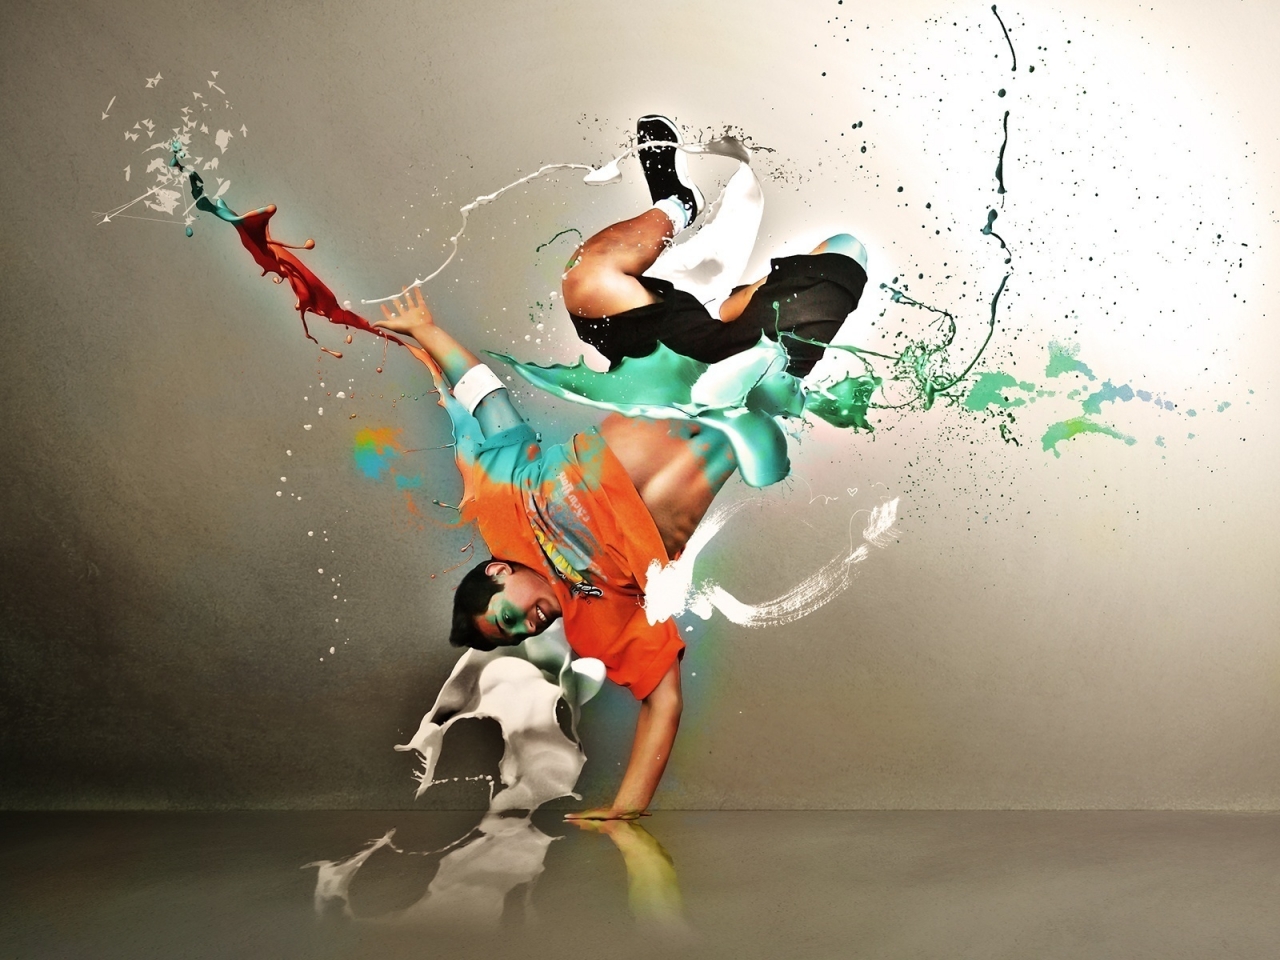 Breakdancer for 1280 x 960 resolution